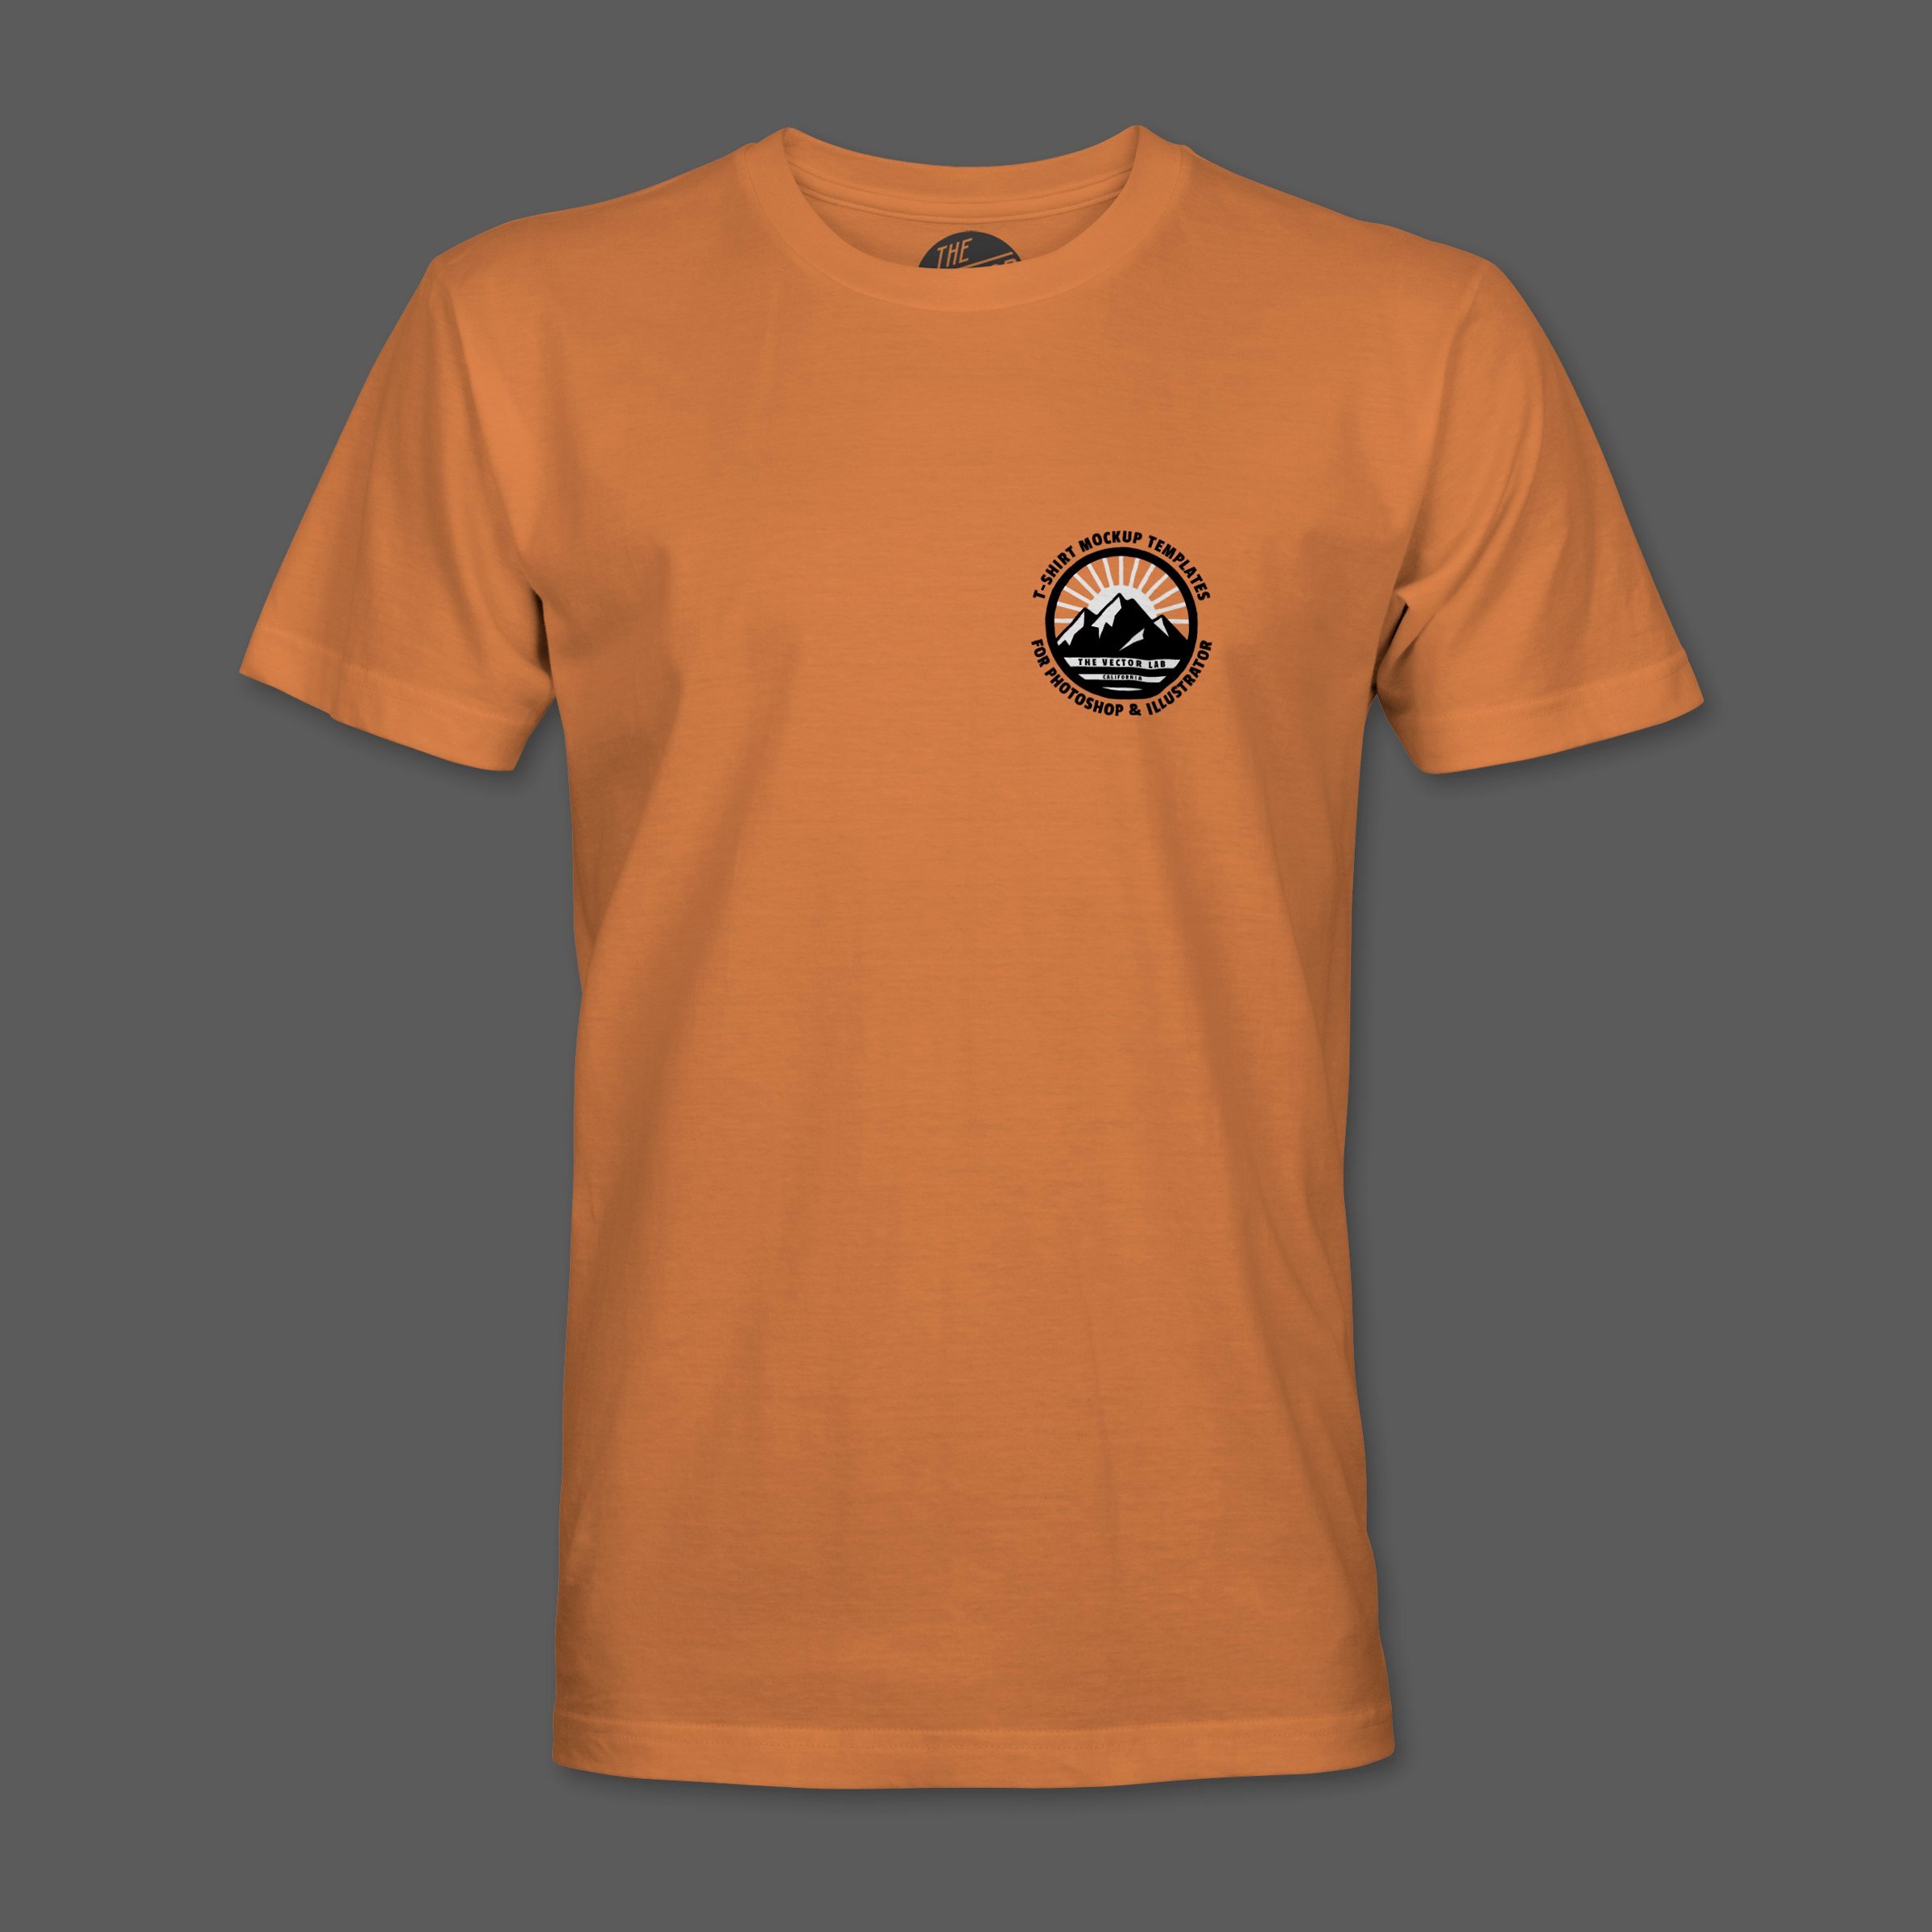 Free T Shirt Template Inspirational Men S T Shirt Mockup Templates Version 5 0 thevectorlab